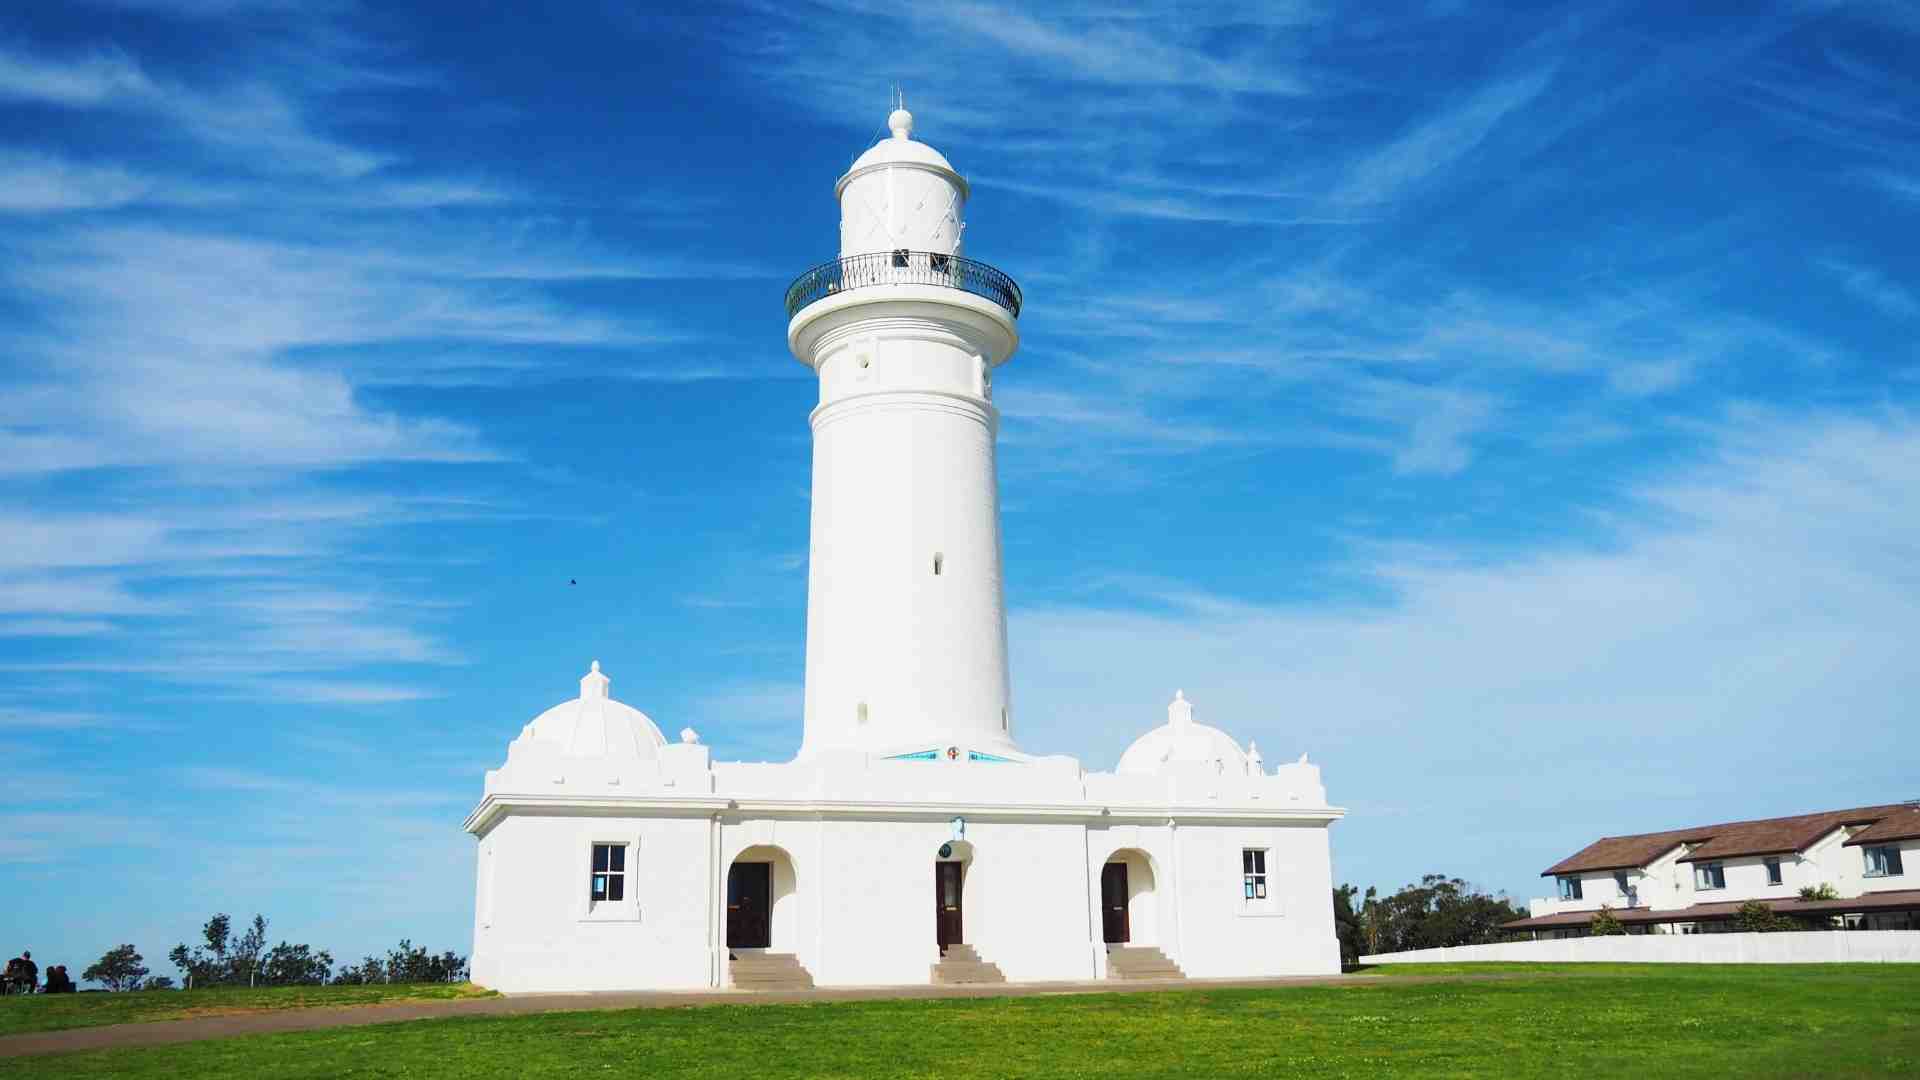 Macquarie Lighthouse | Sydney Lighthouses | Lighthouse in Sydney | Australian lighthouses